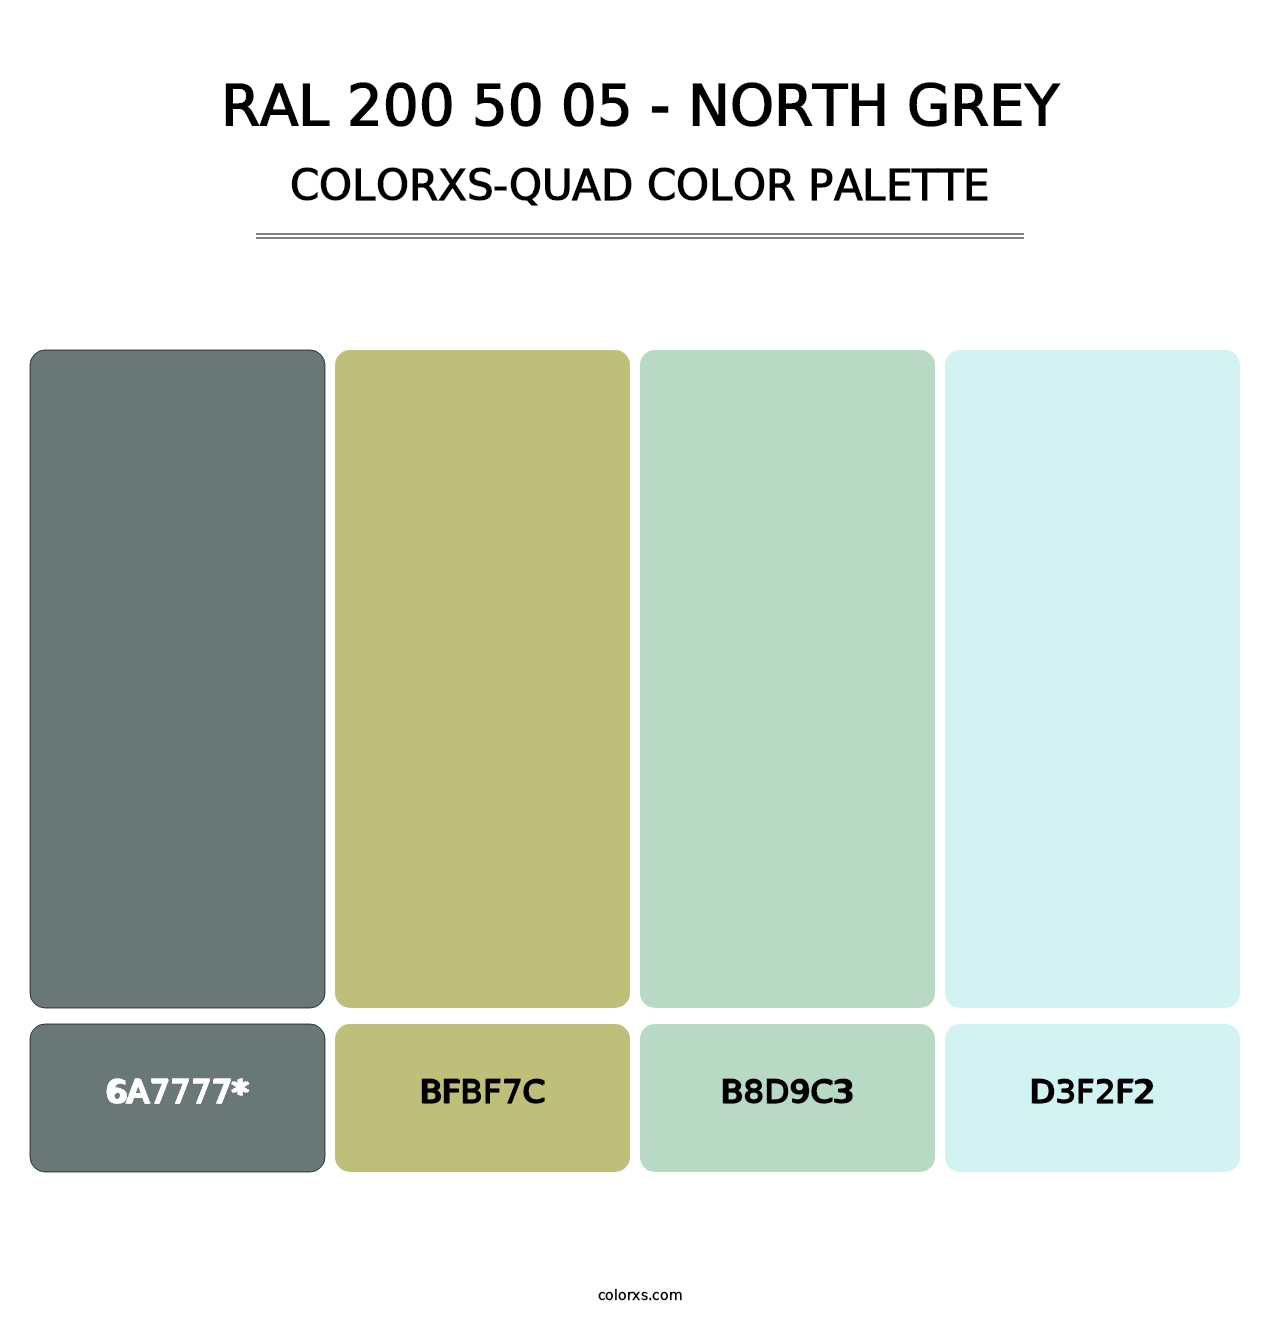 RAL 200 50 05 - North Grey - Colorxs Quad Palette